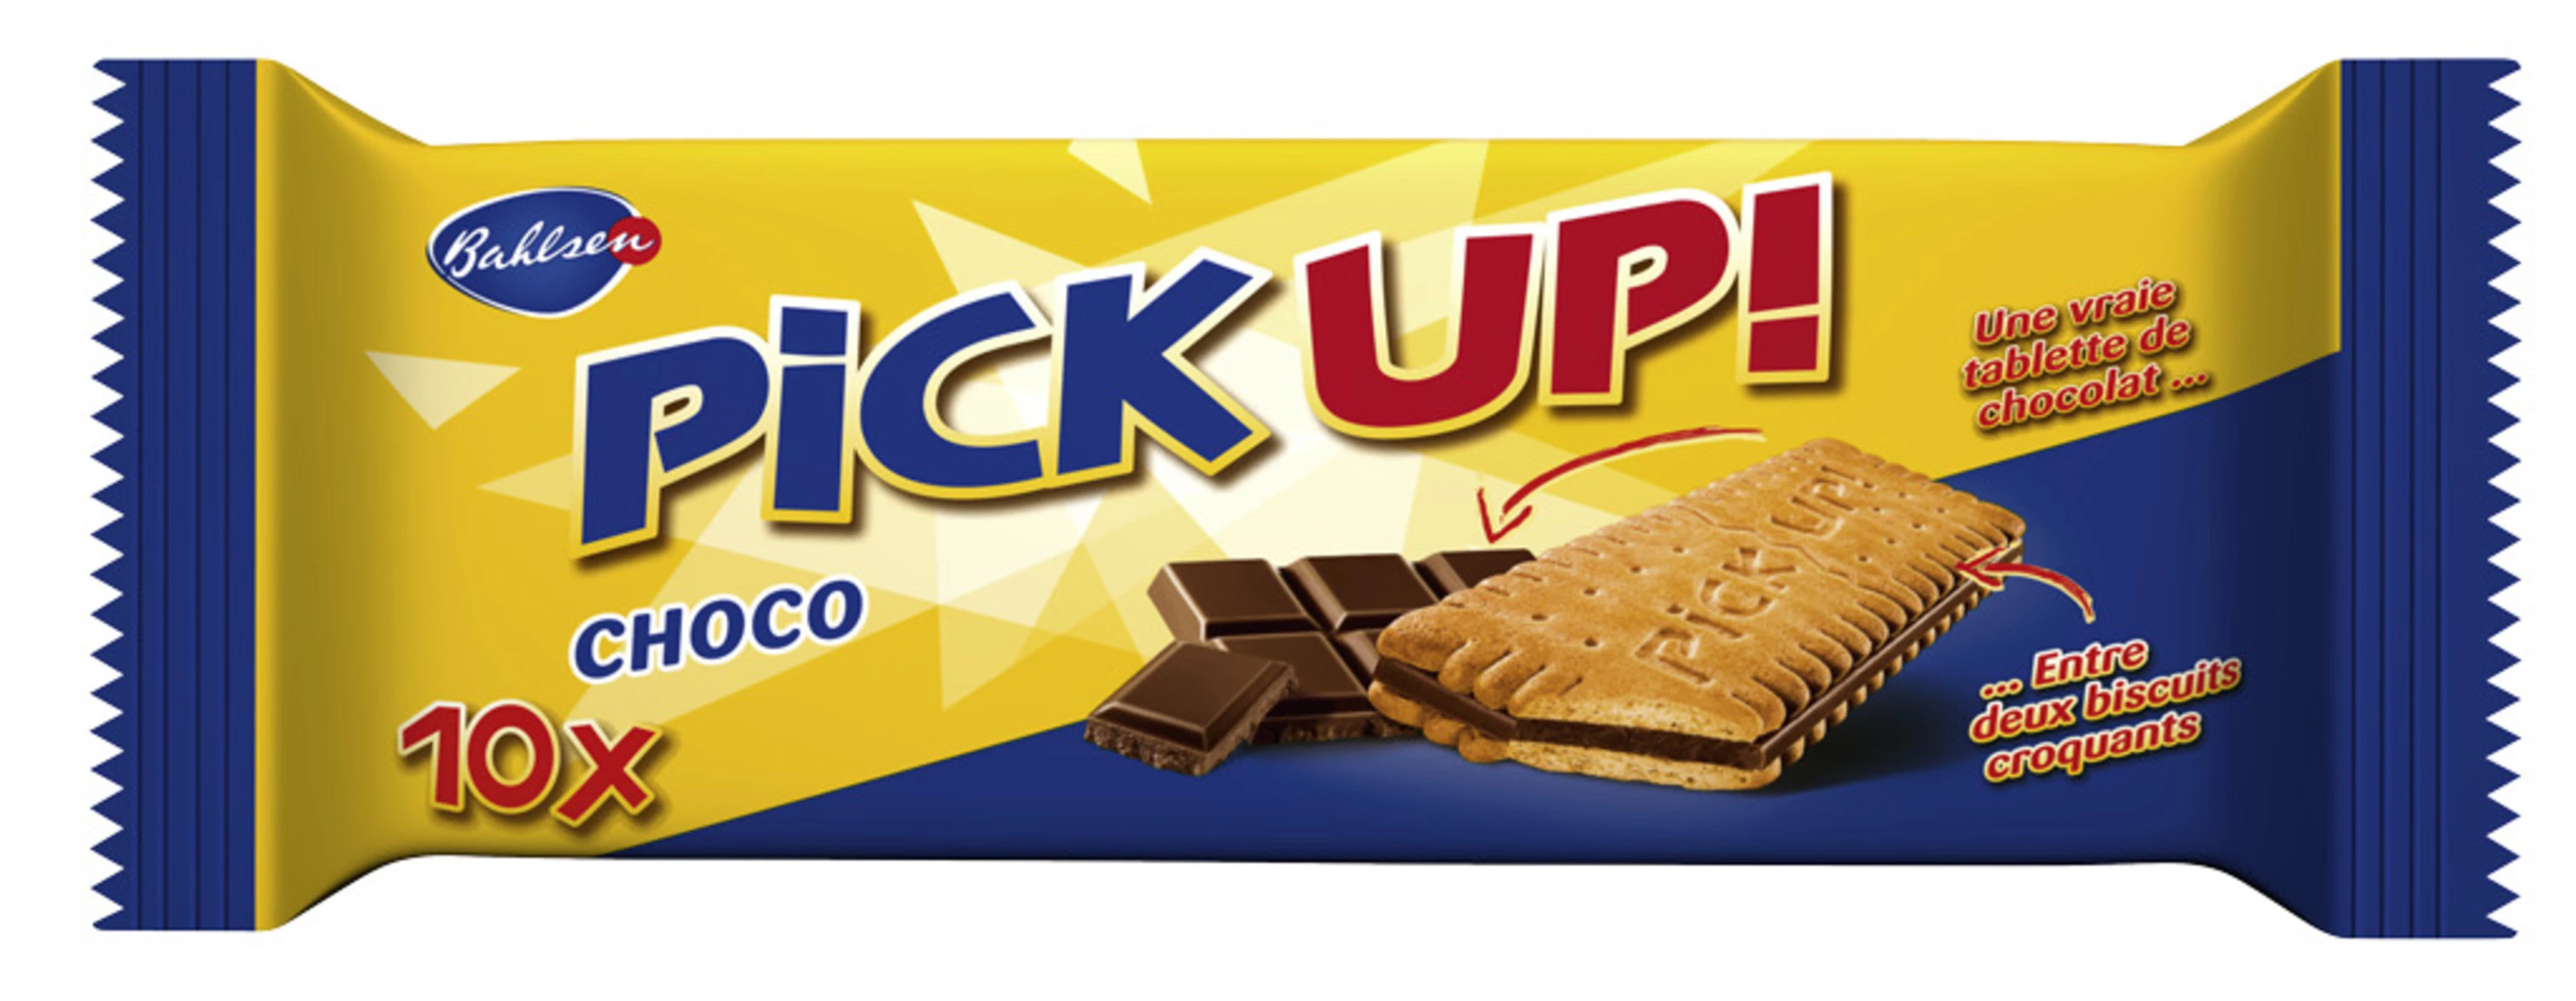 Pickup Choco Pack 10x28g - BAHLSEN